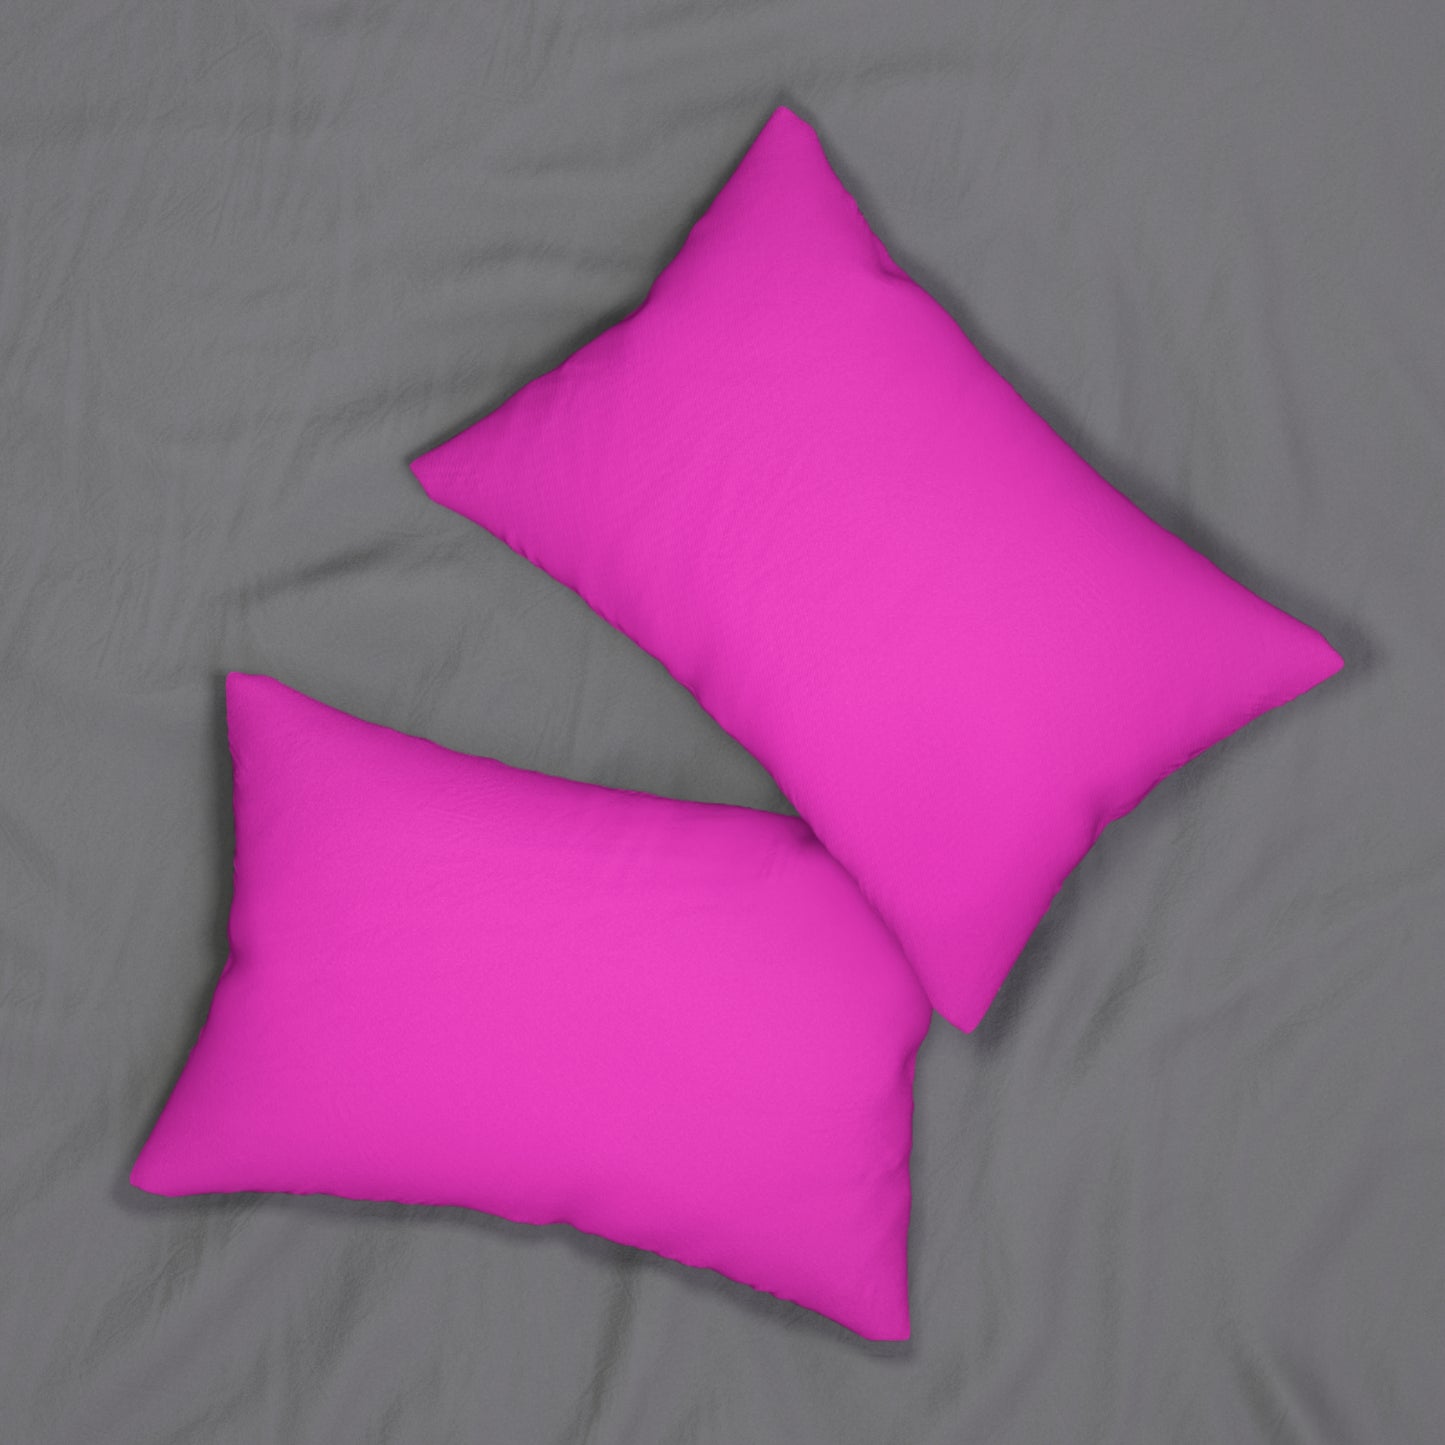 Pink Accent Pillow